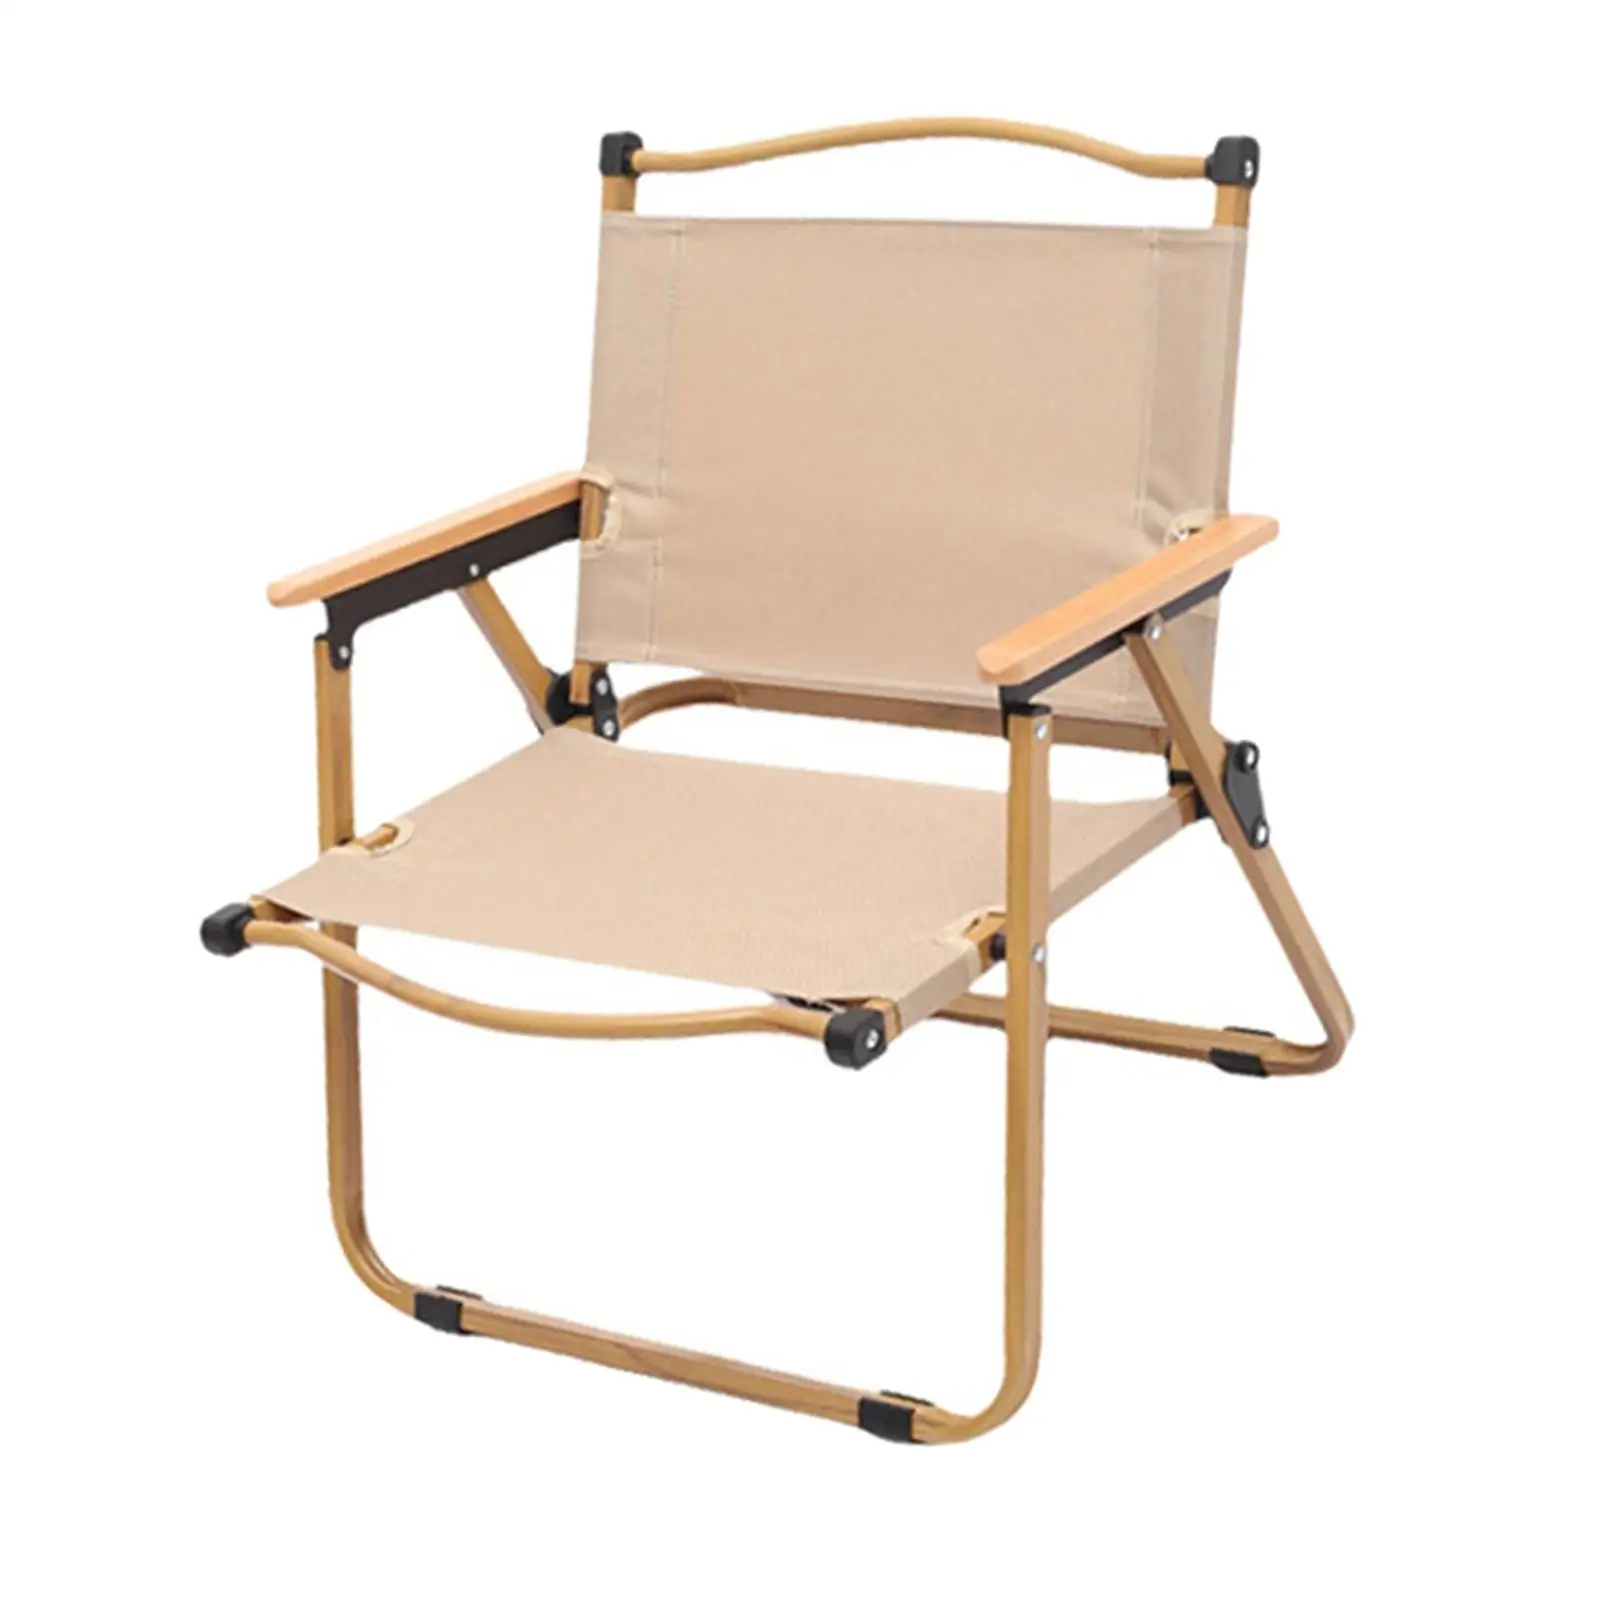 Camping Folding Chair Backrest Chair Lightweight Portable Holds 330lbs Heavy Duty Armchair for Park Concert Lawn Beach Garden